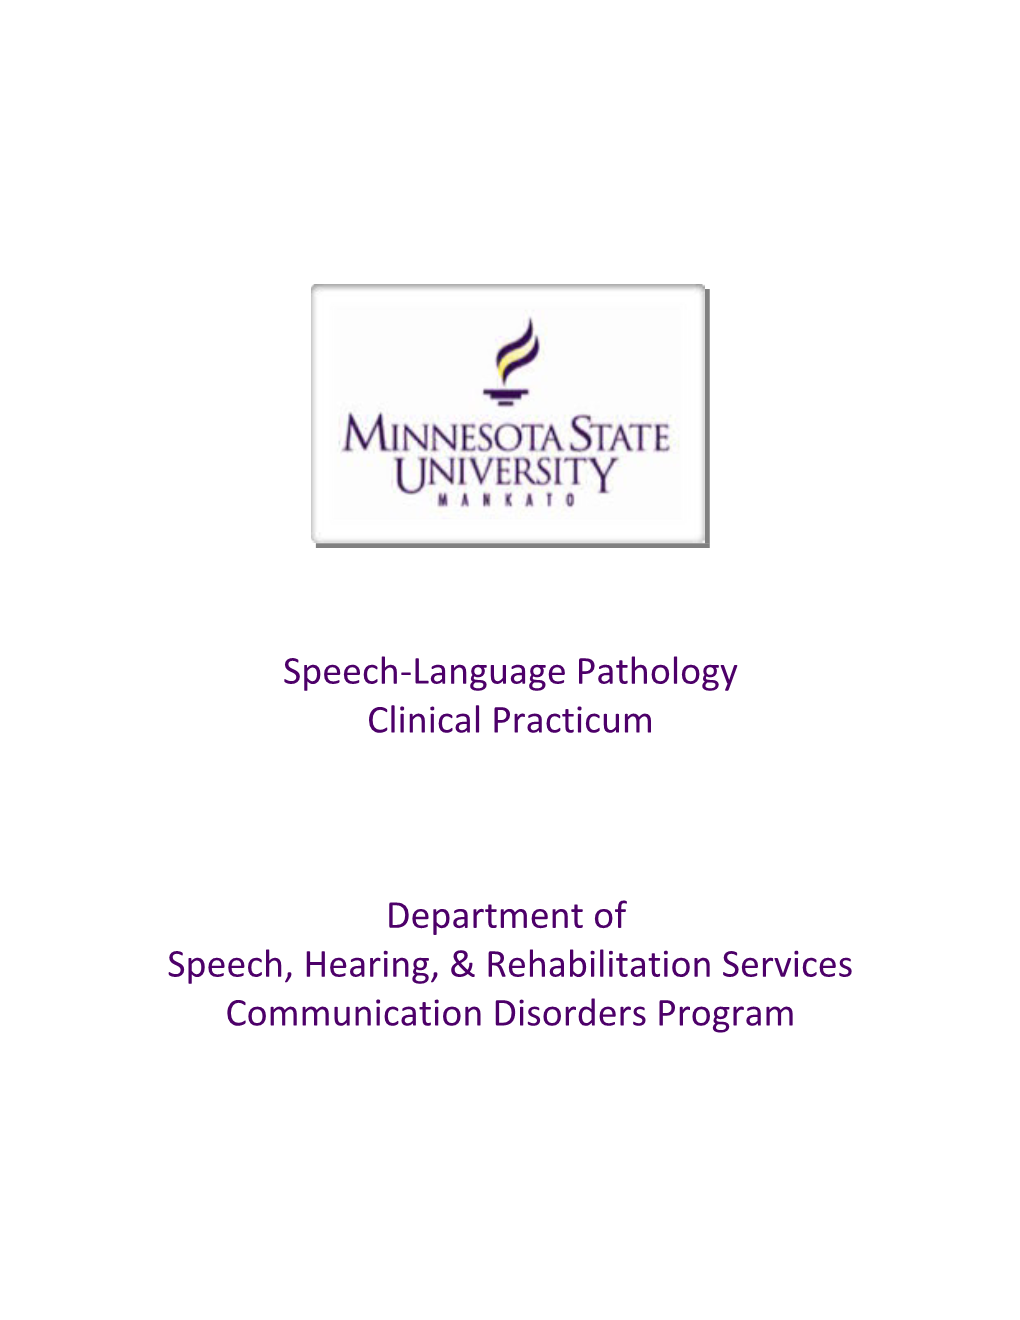 Speech, Hearing, & Rehabilitation Services